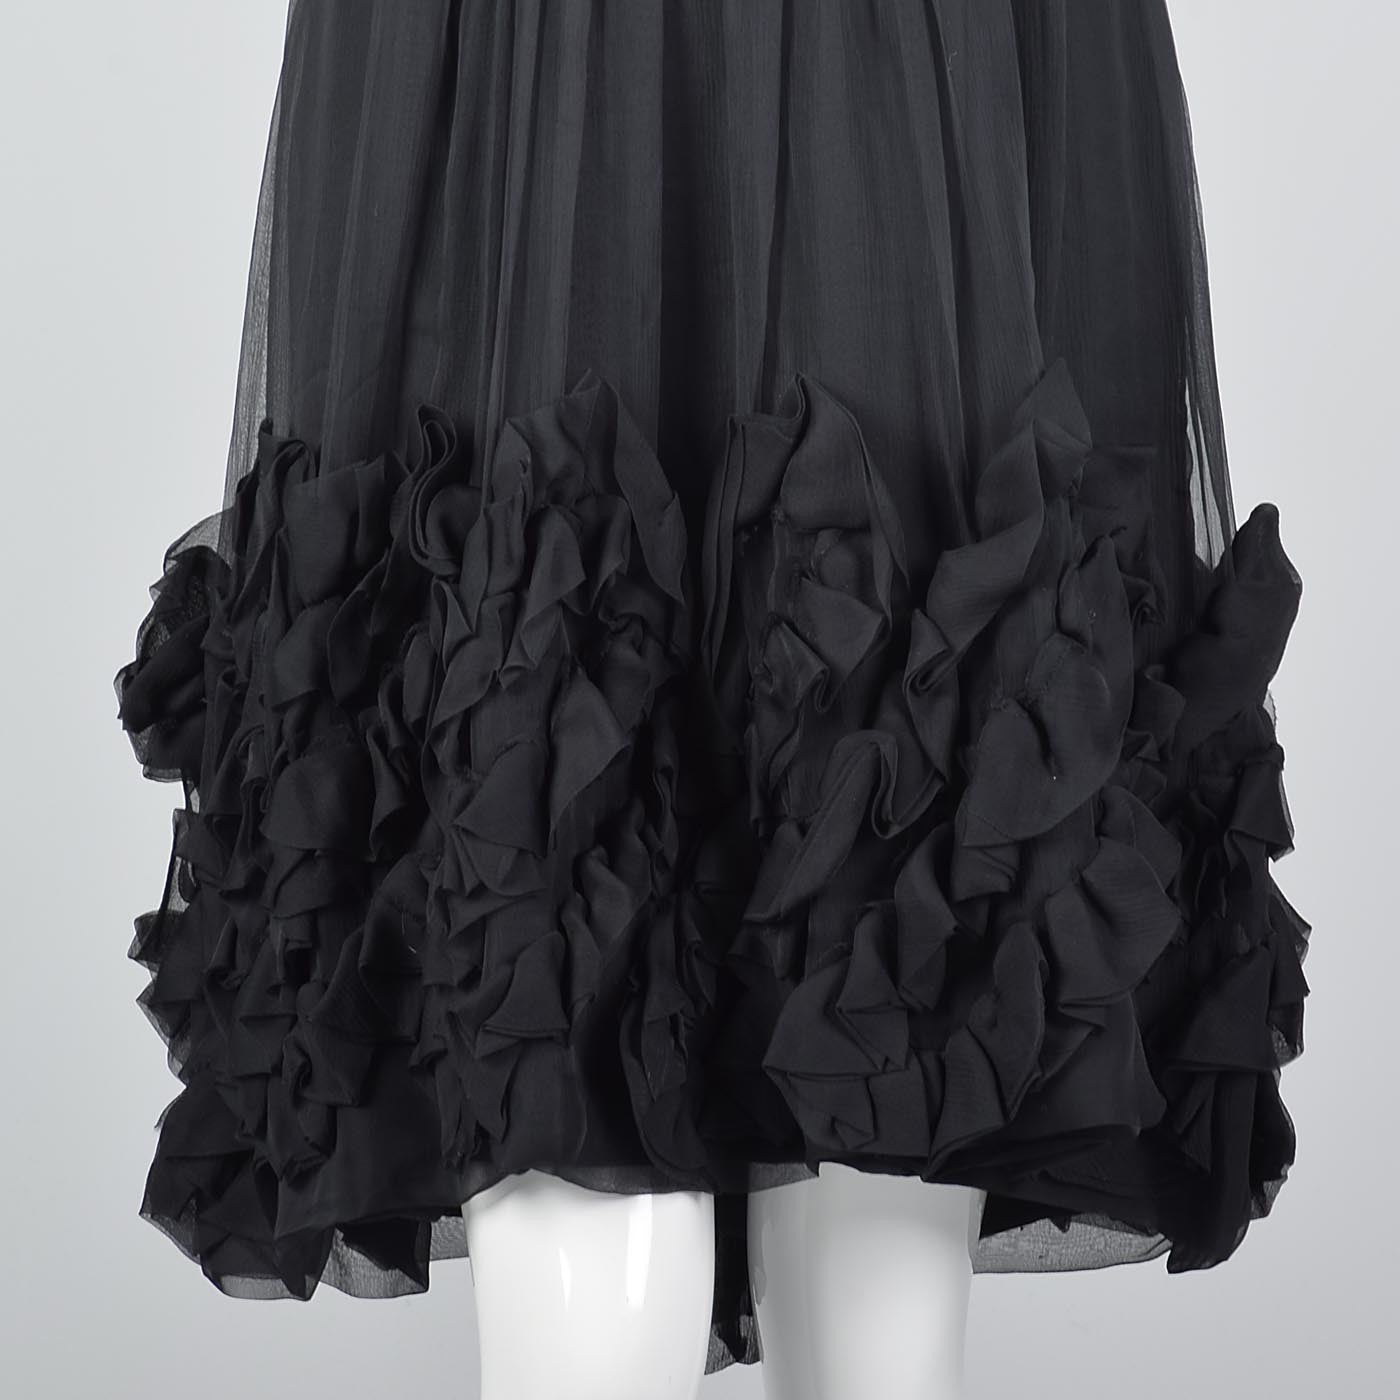 1950s Mollie Parnis Black Silk Cocktail Dress